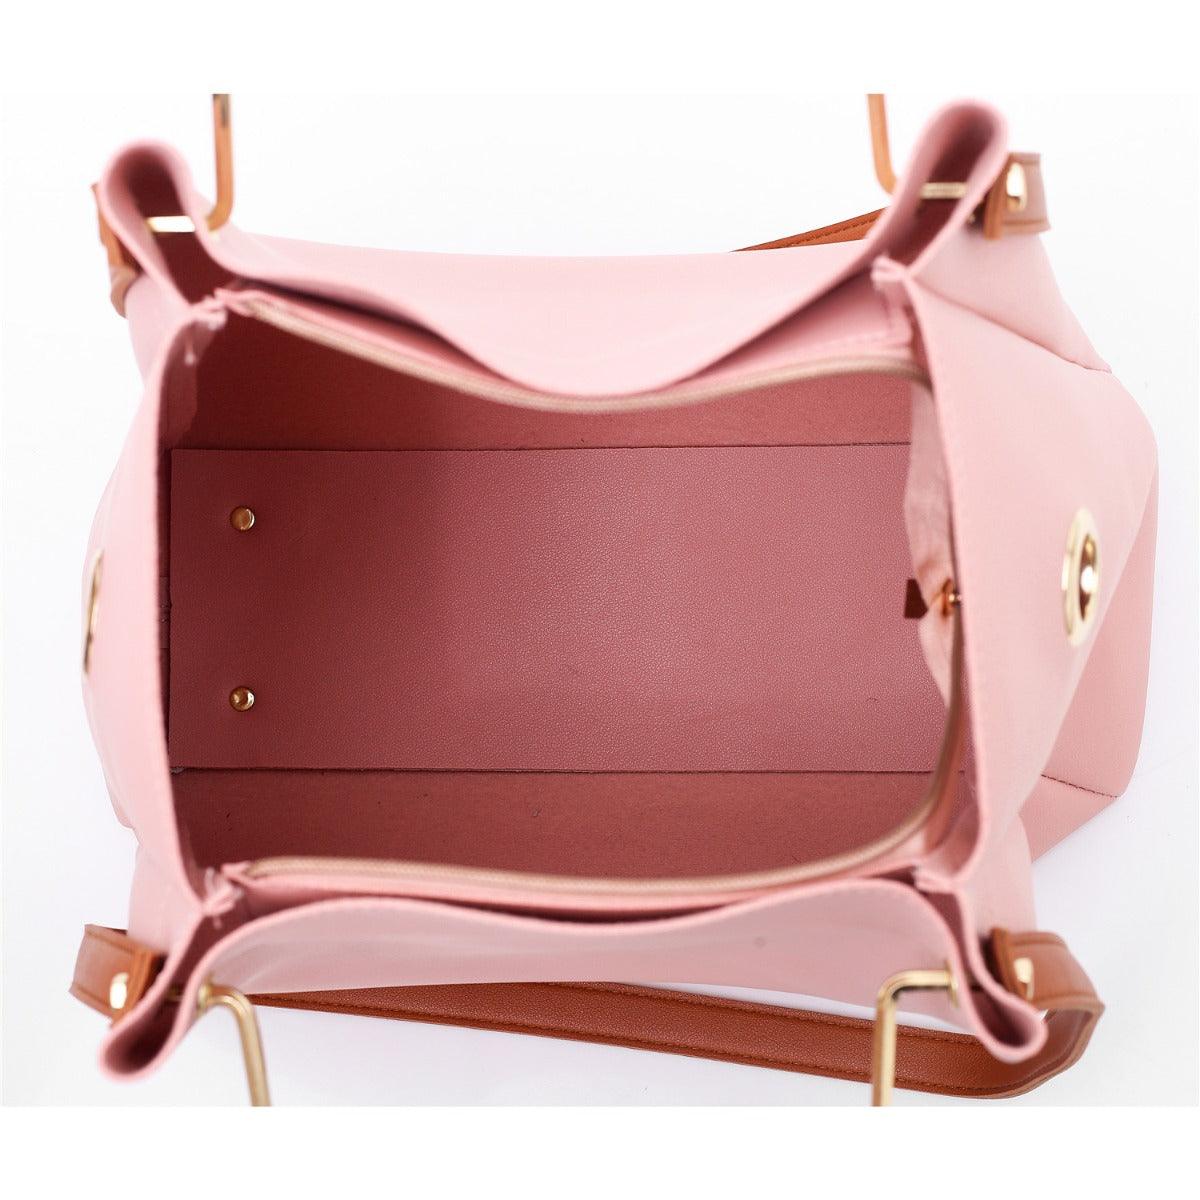 Guluded Leather Portable Handbag Navyblue - Obeezi.com